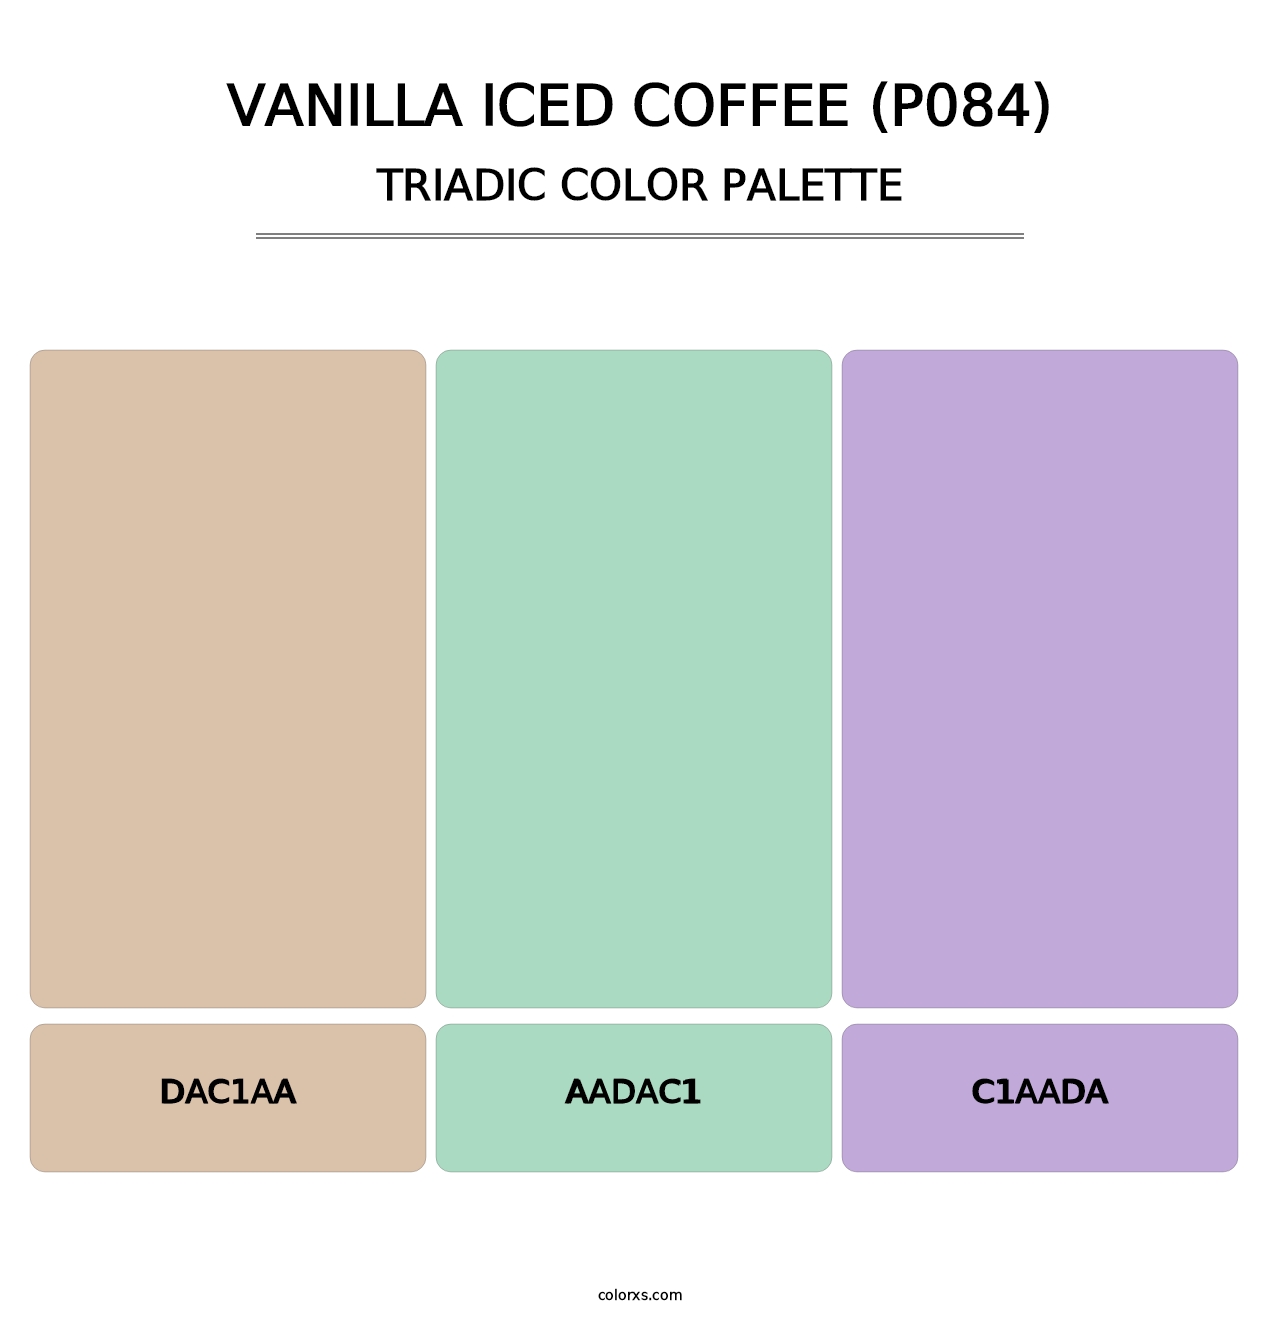 Vanilla Iced Coffee (P084) - Triadic Color Palette